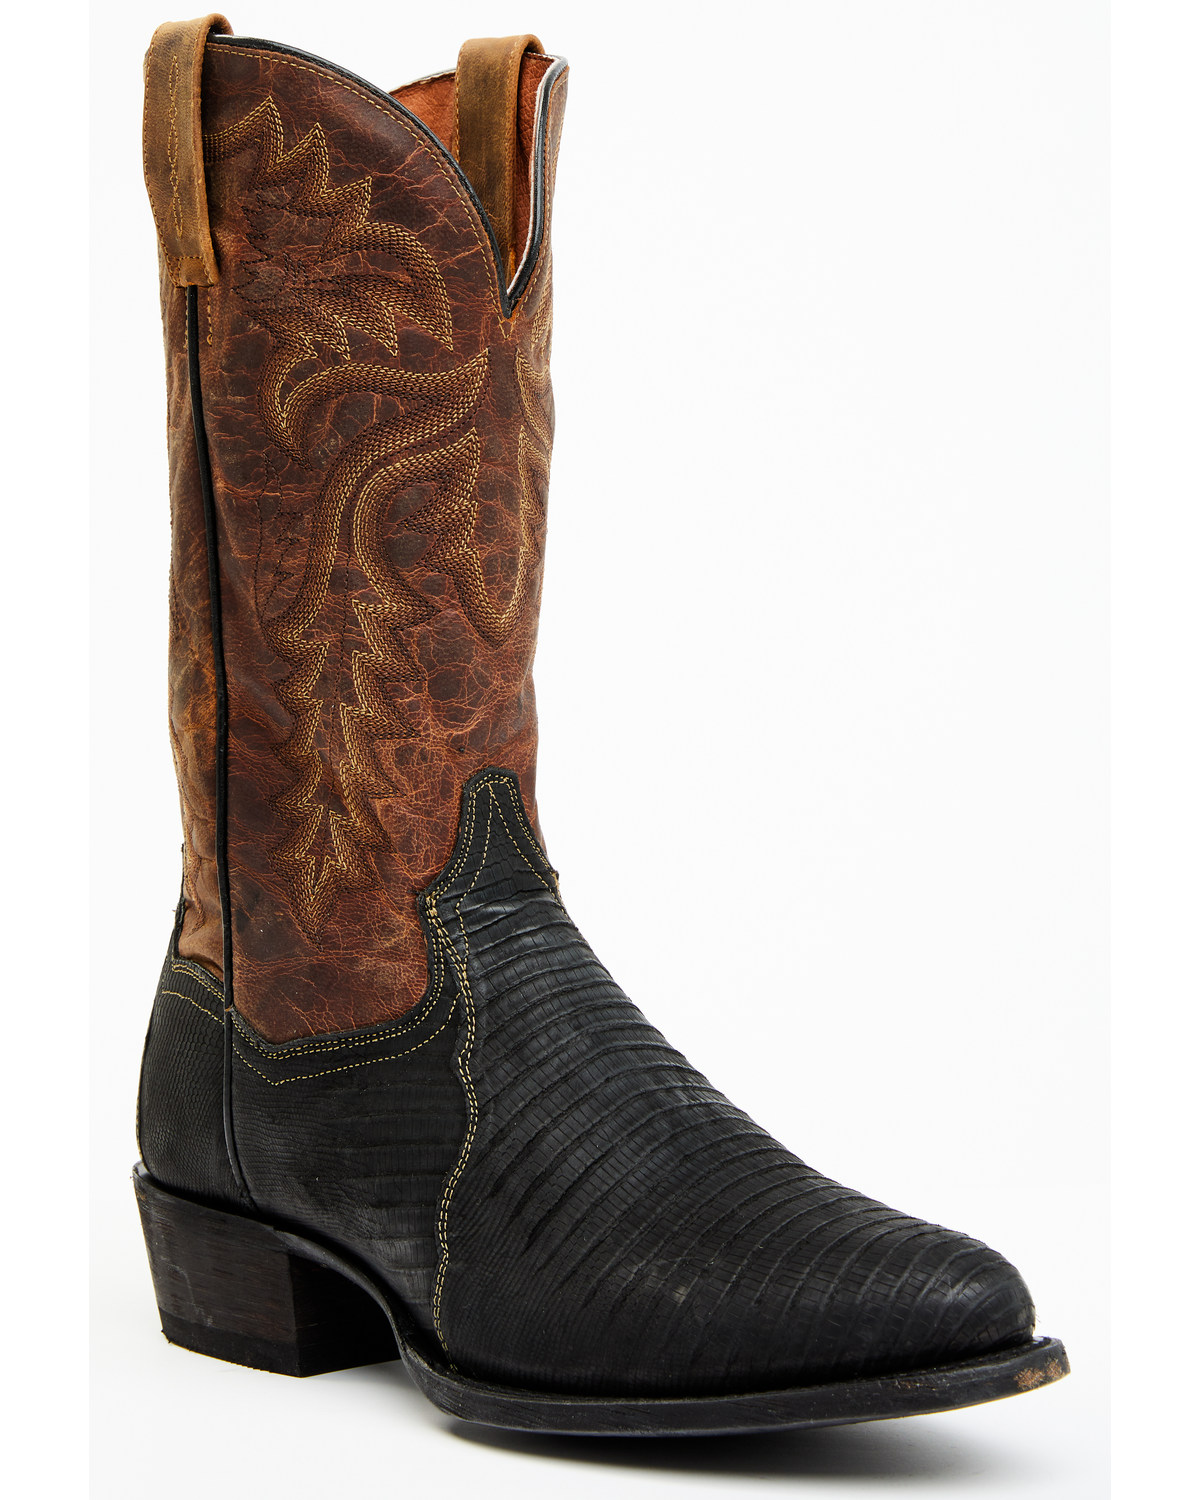 Dan Post Men's Winston Exotic Teju Lizard Western Boots - Medium Toe